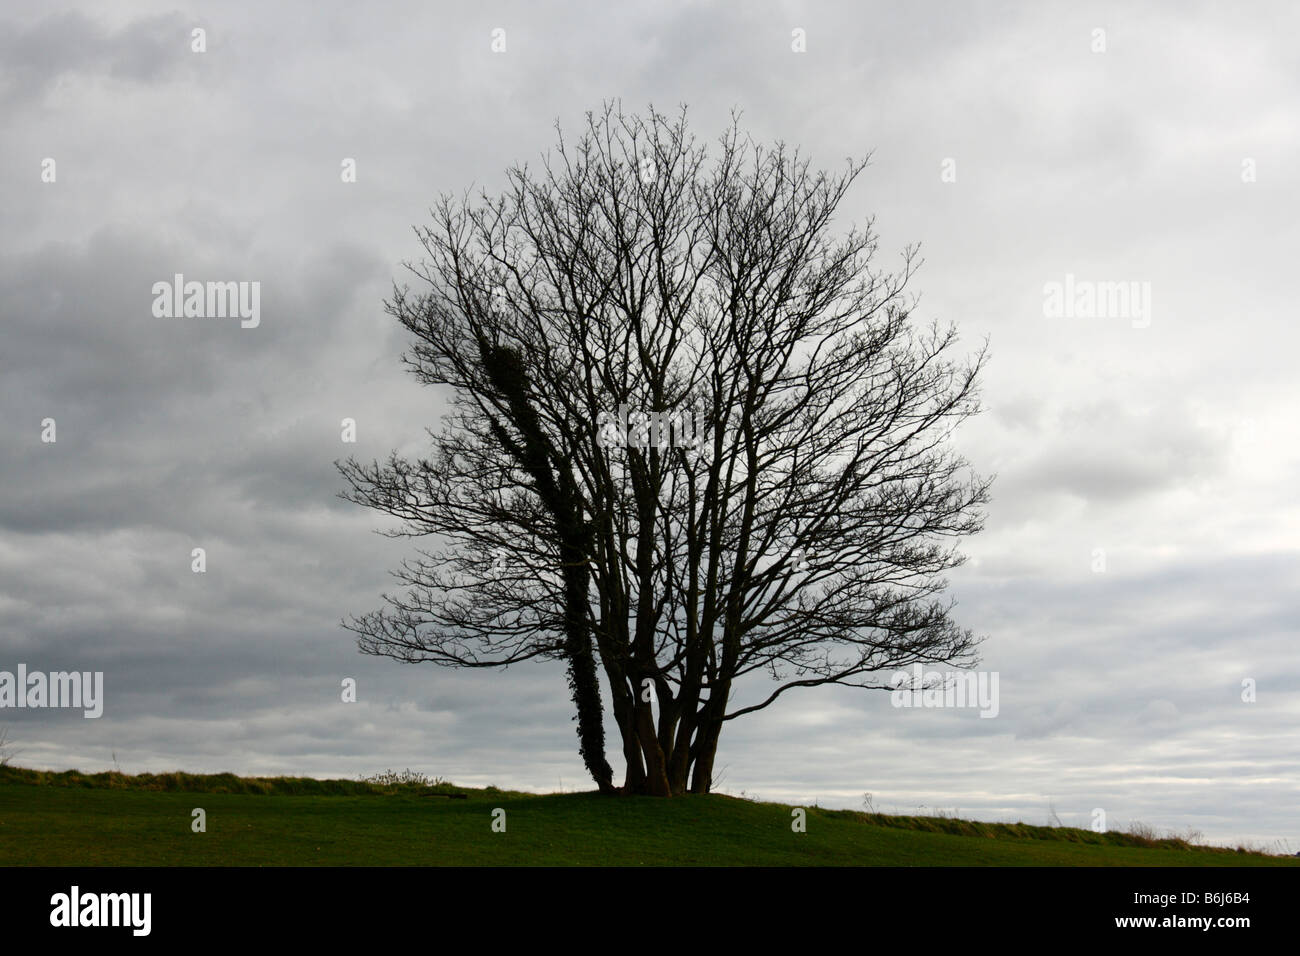 Tree in Silhouette against a dark, gloomy sky Stock Photo